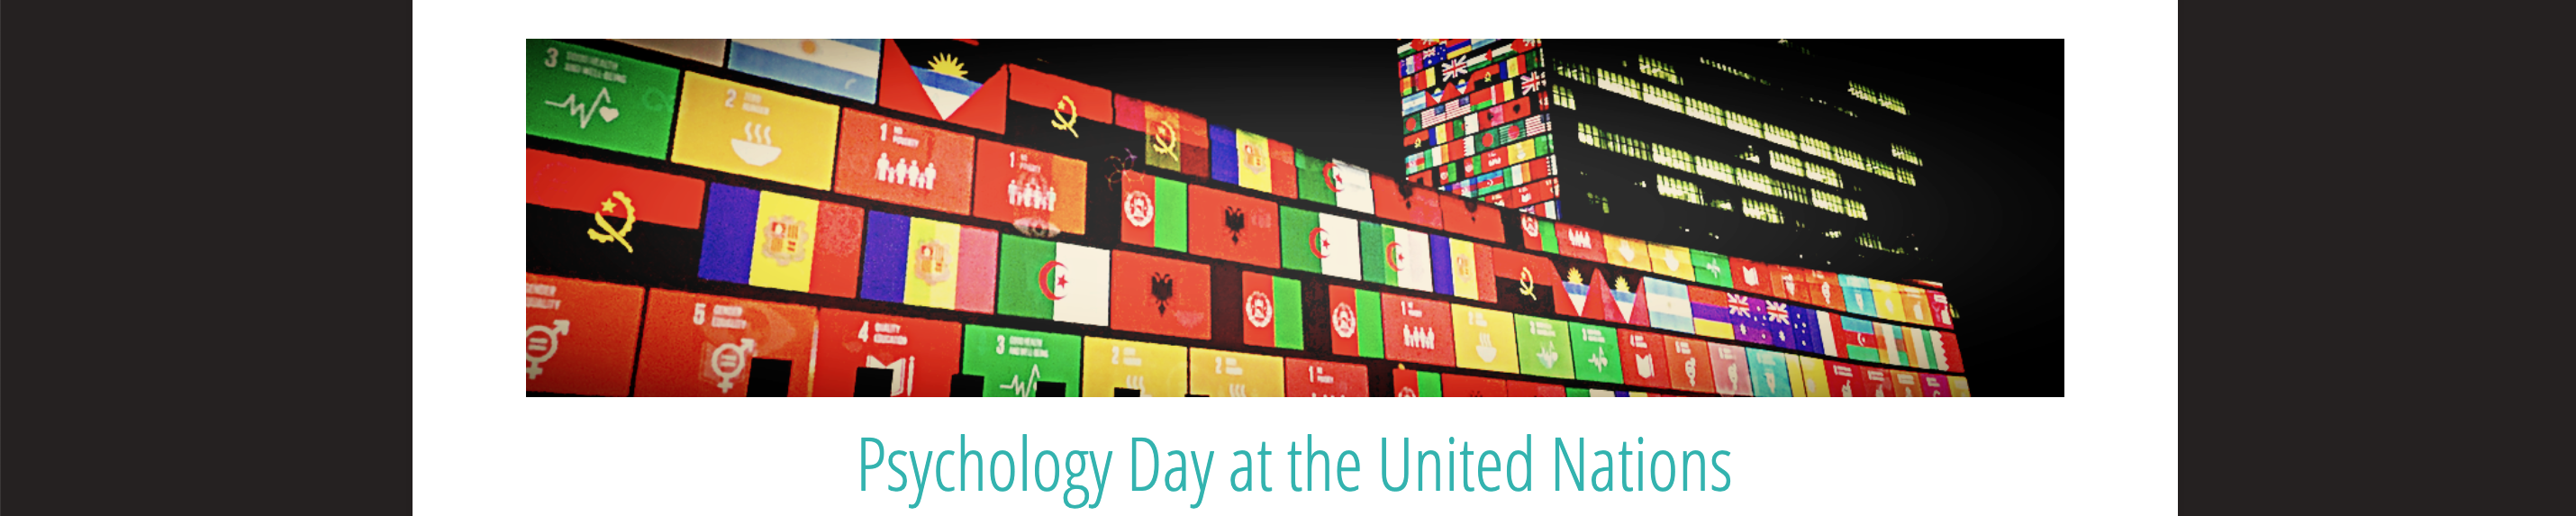 United Nations Psychology Day